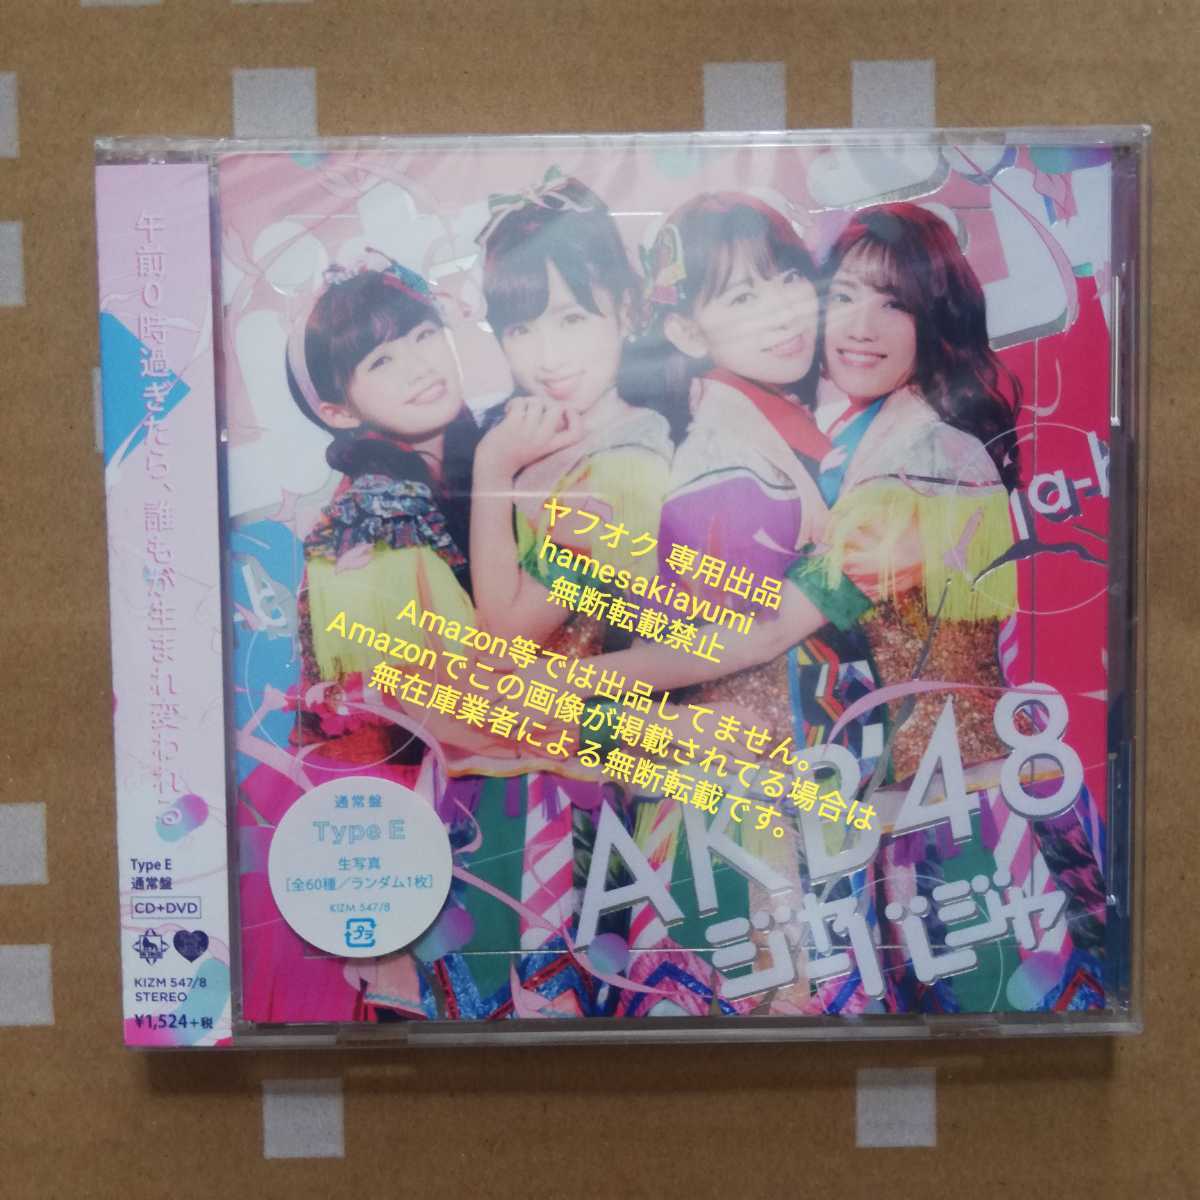 AKB48 ジャーバージャ 通常盤 CD+DVD Type-E 坂道AKB 国境のない時代